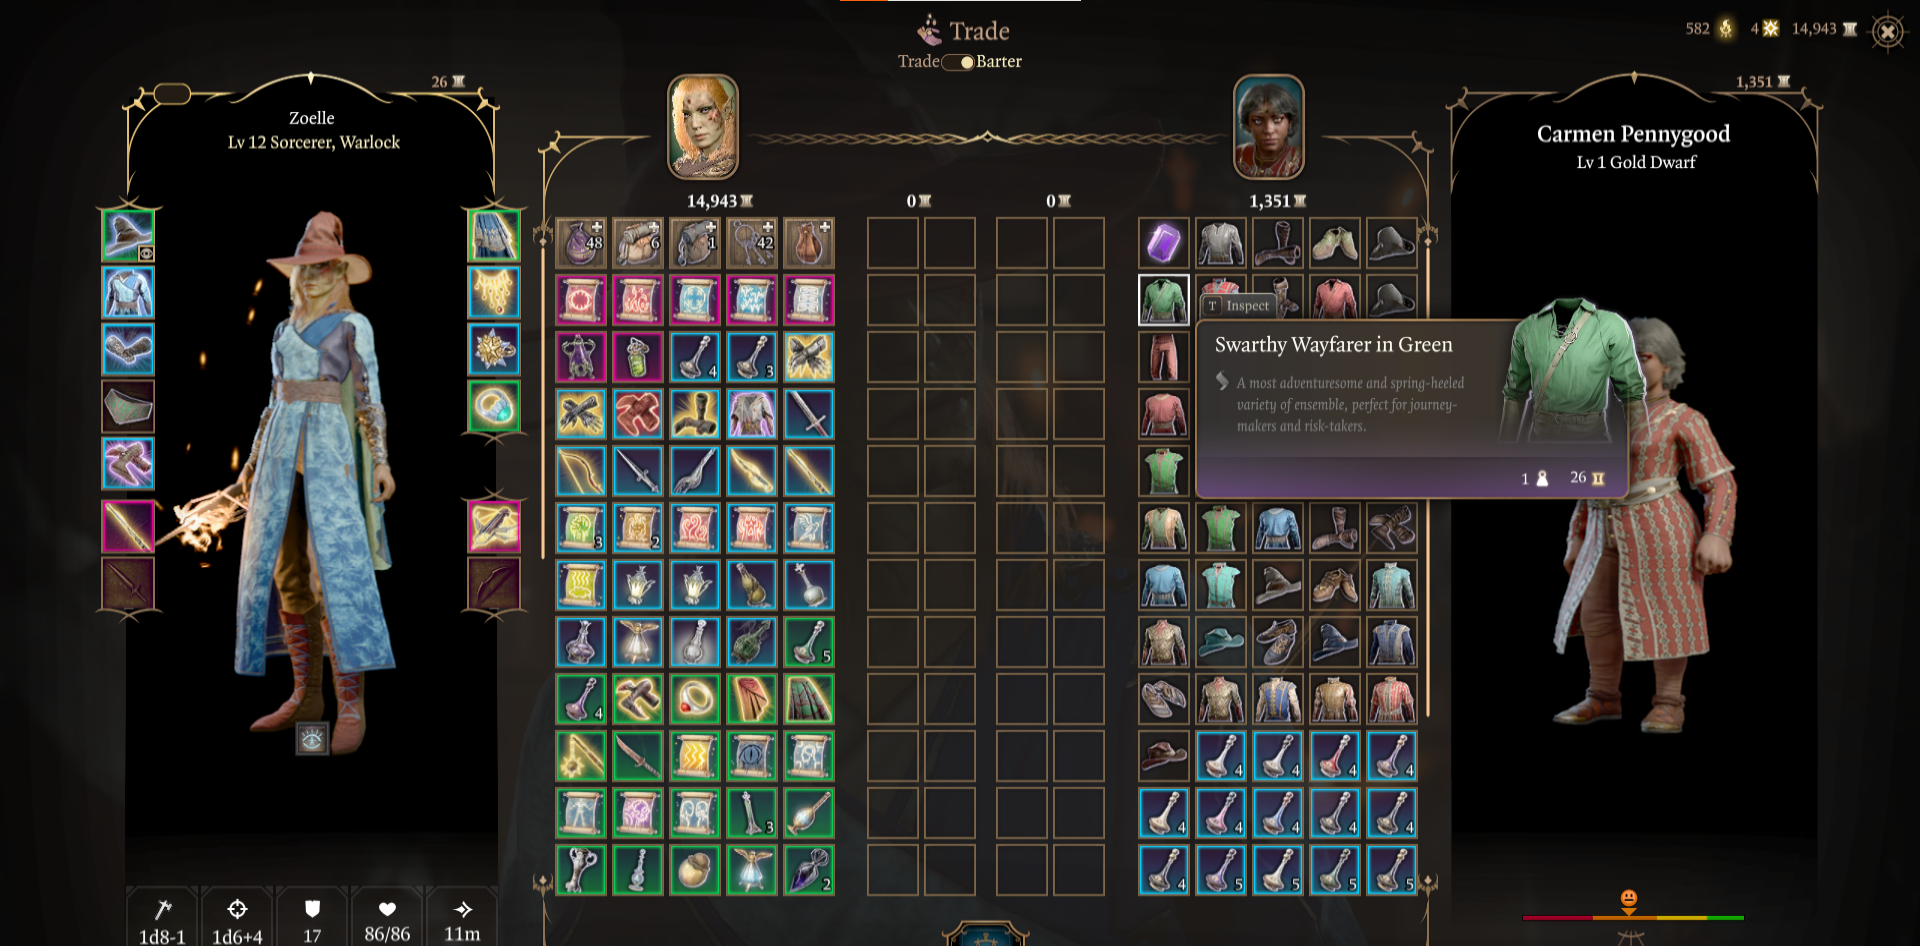 A screenshot of Carm's Garm's Camp Clothing options in Baldur's Gate 3. 